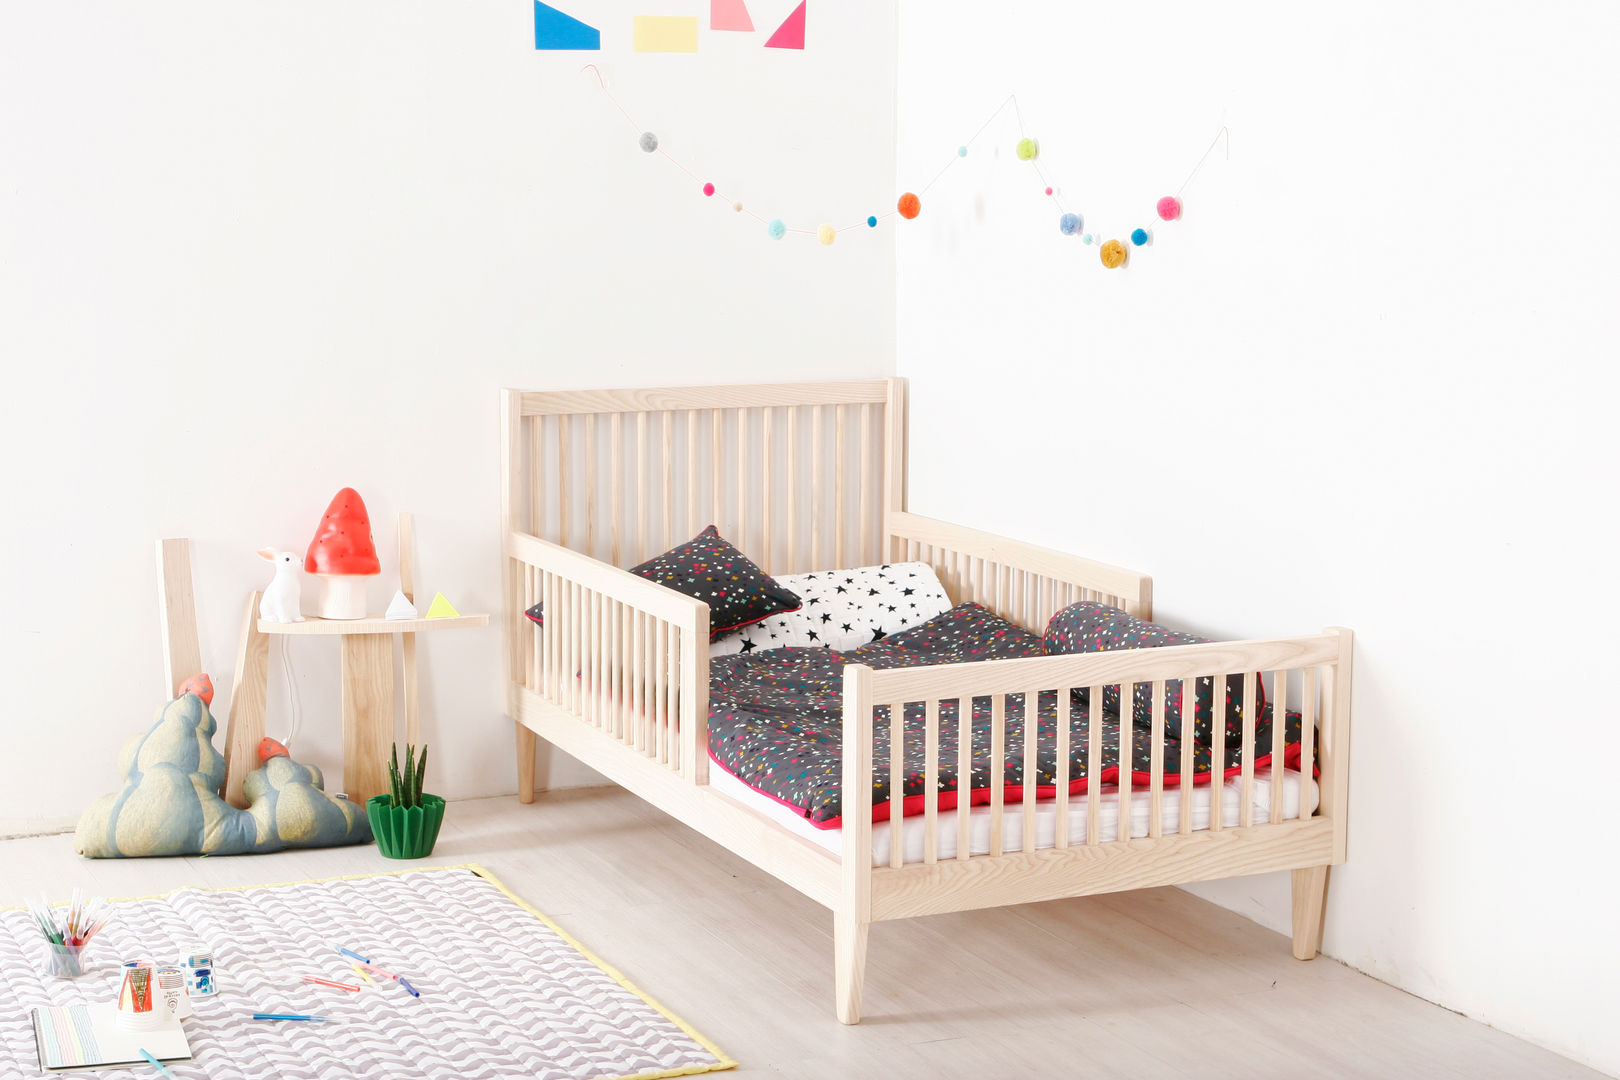 universe series, wie ein KINO wie ein KINO Nursery/kid’s room Beds & cribs